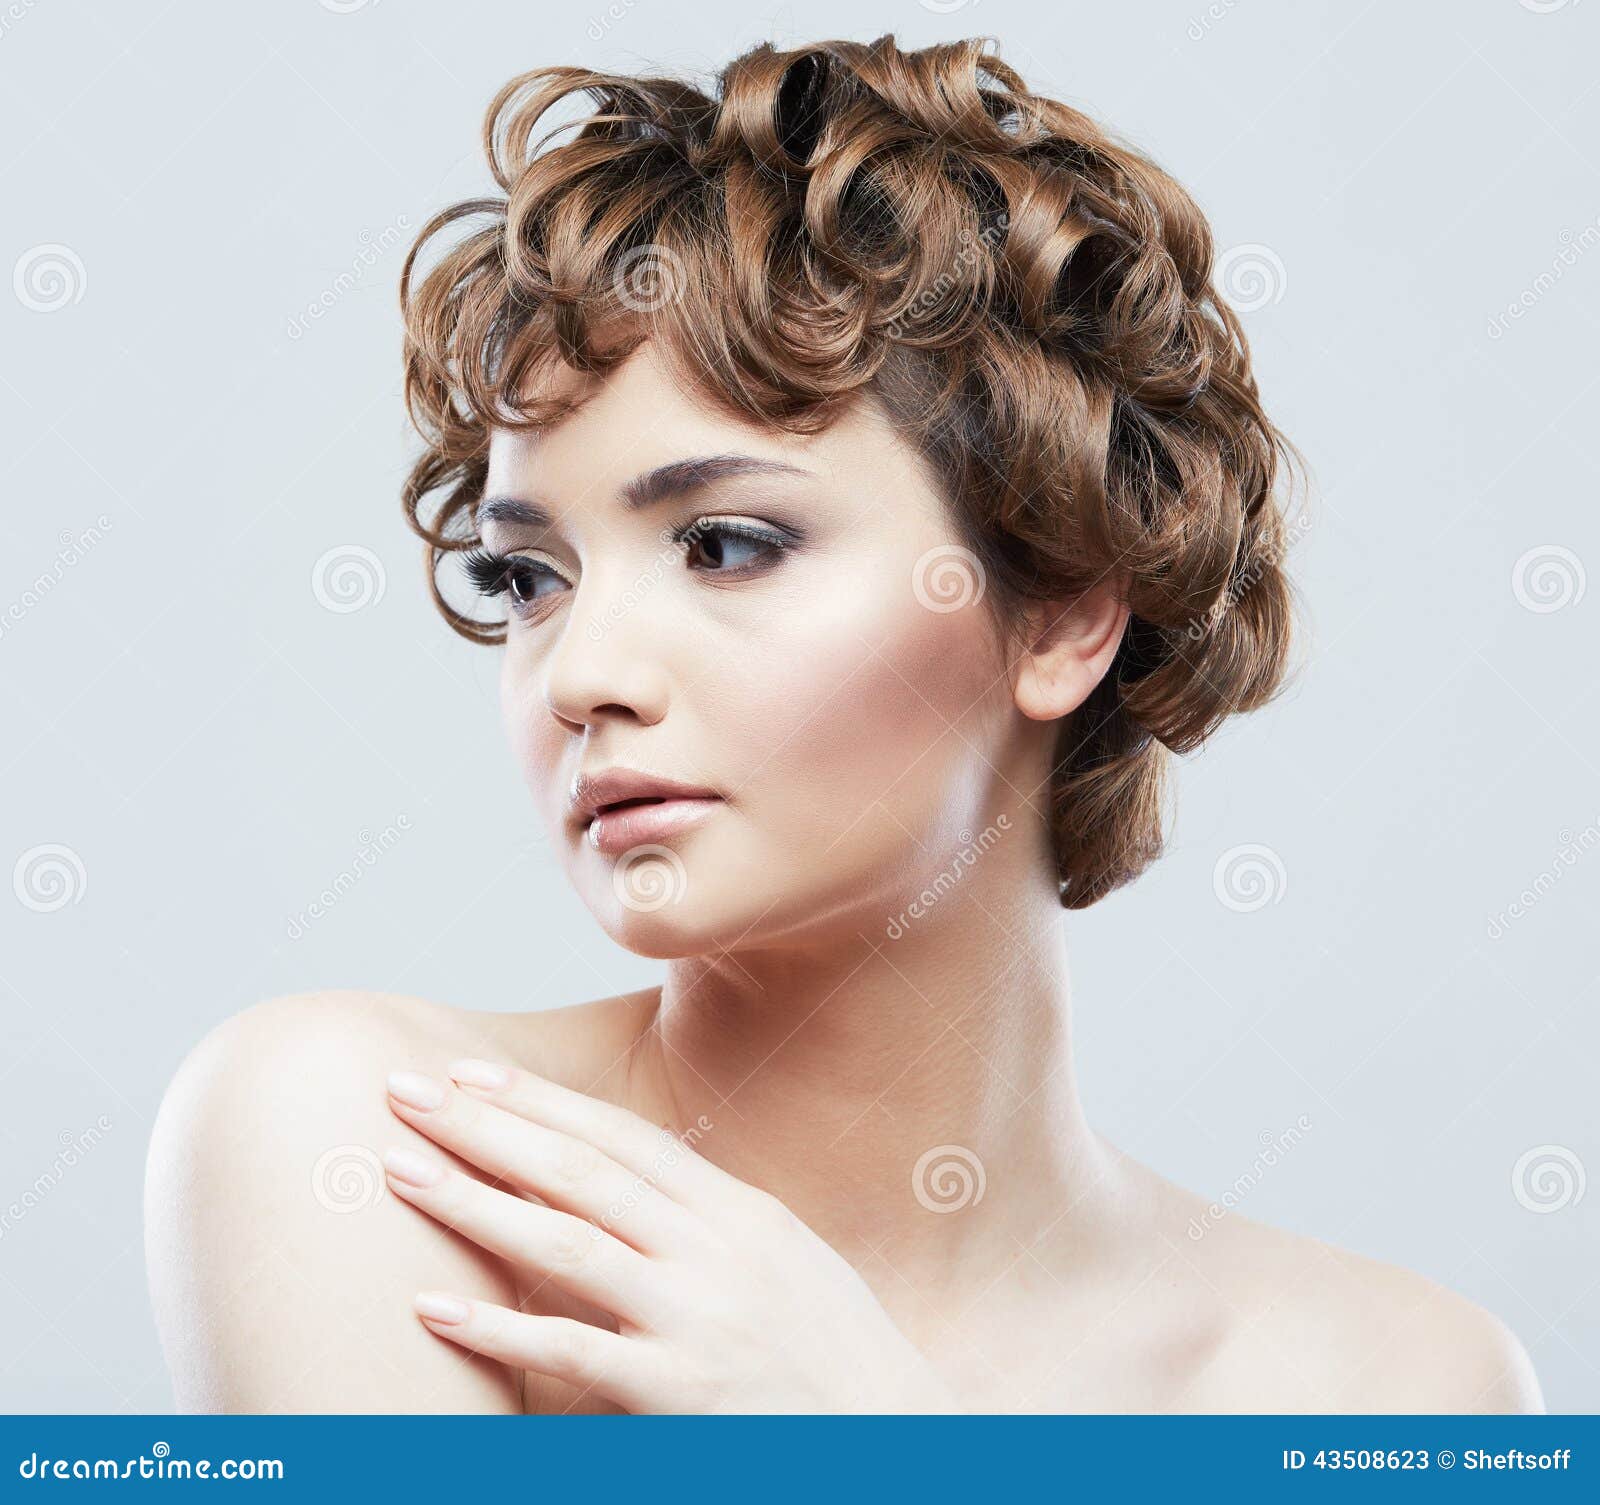 Young Woman Close Up Face Beauty Portrait.Short Ha Stock ...